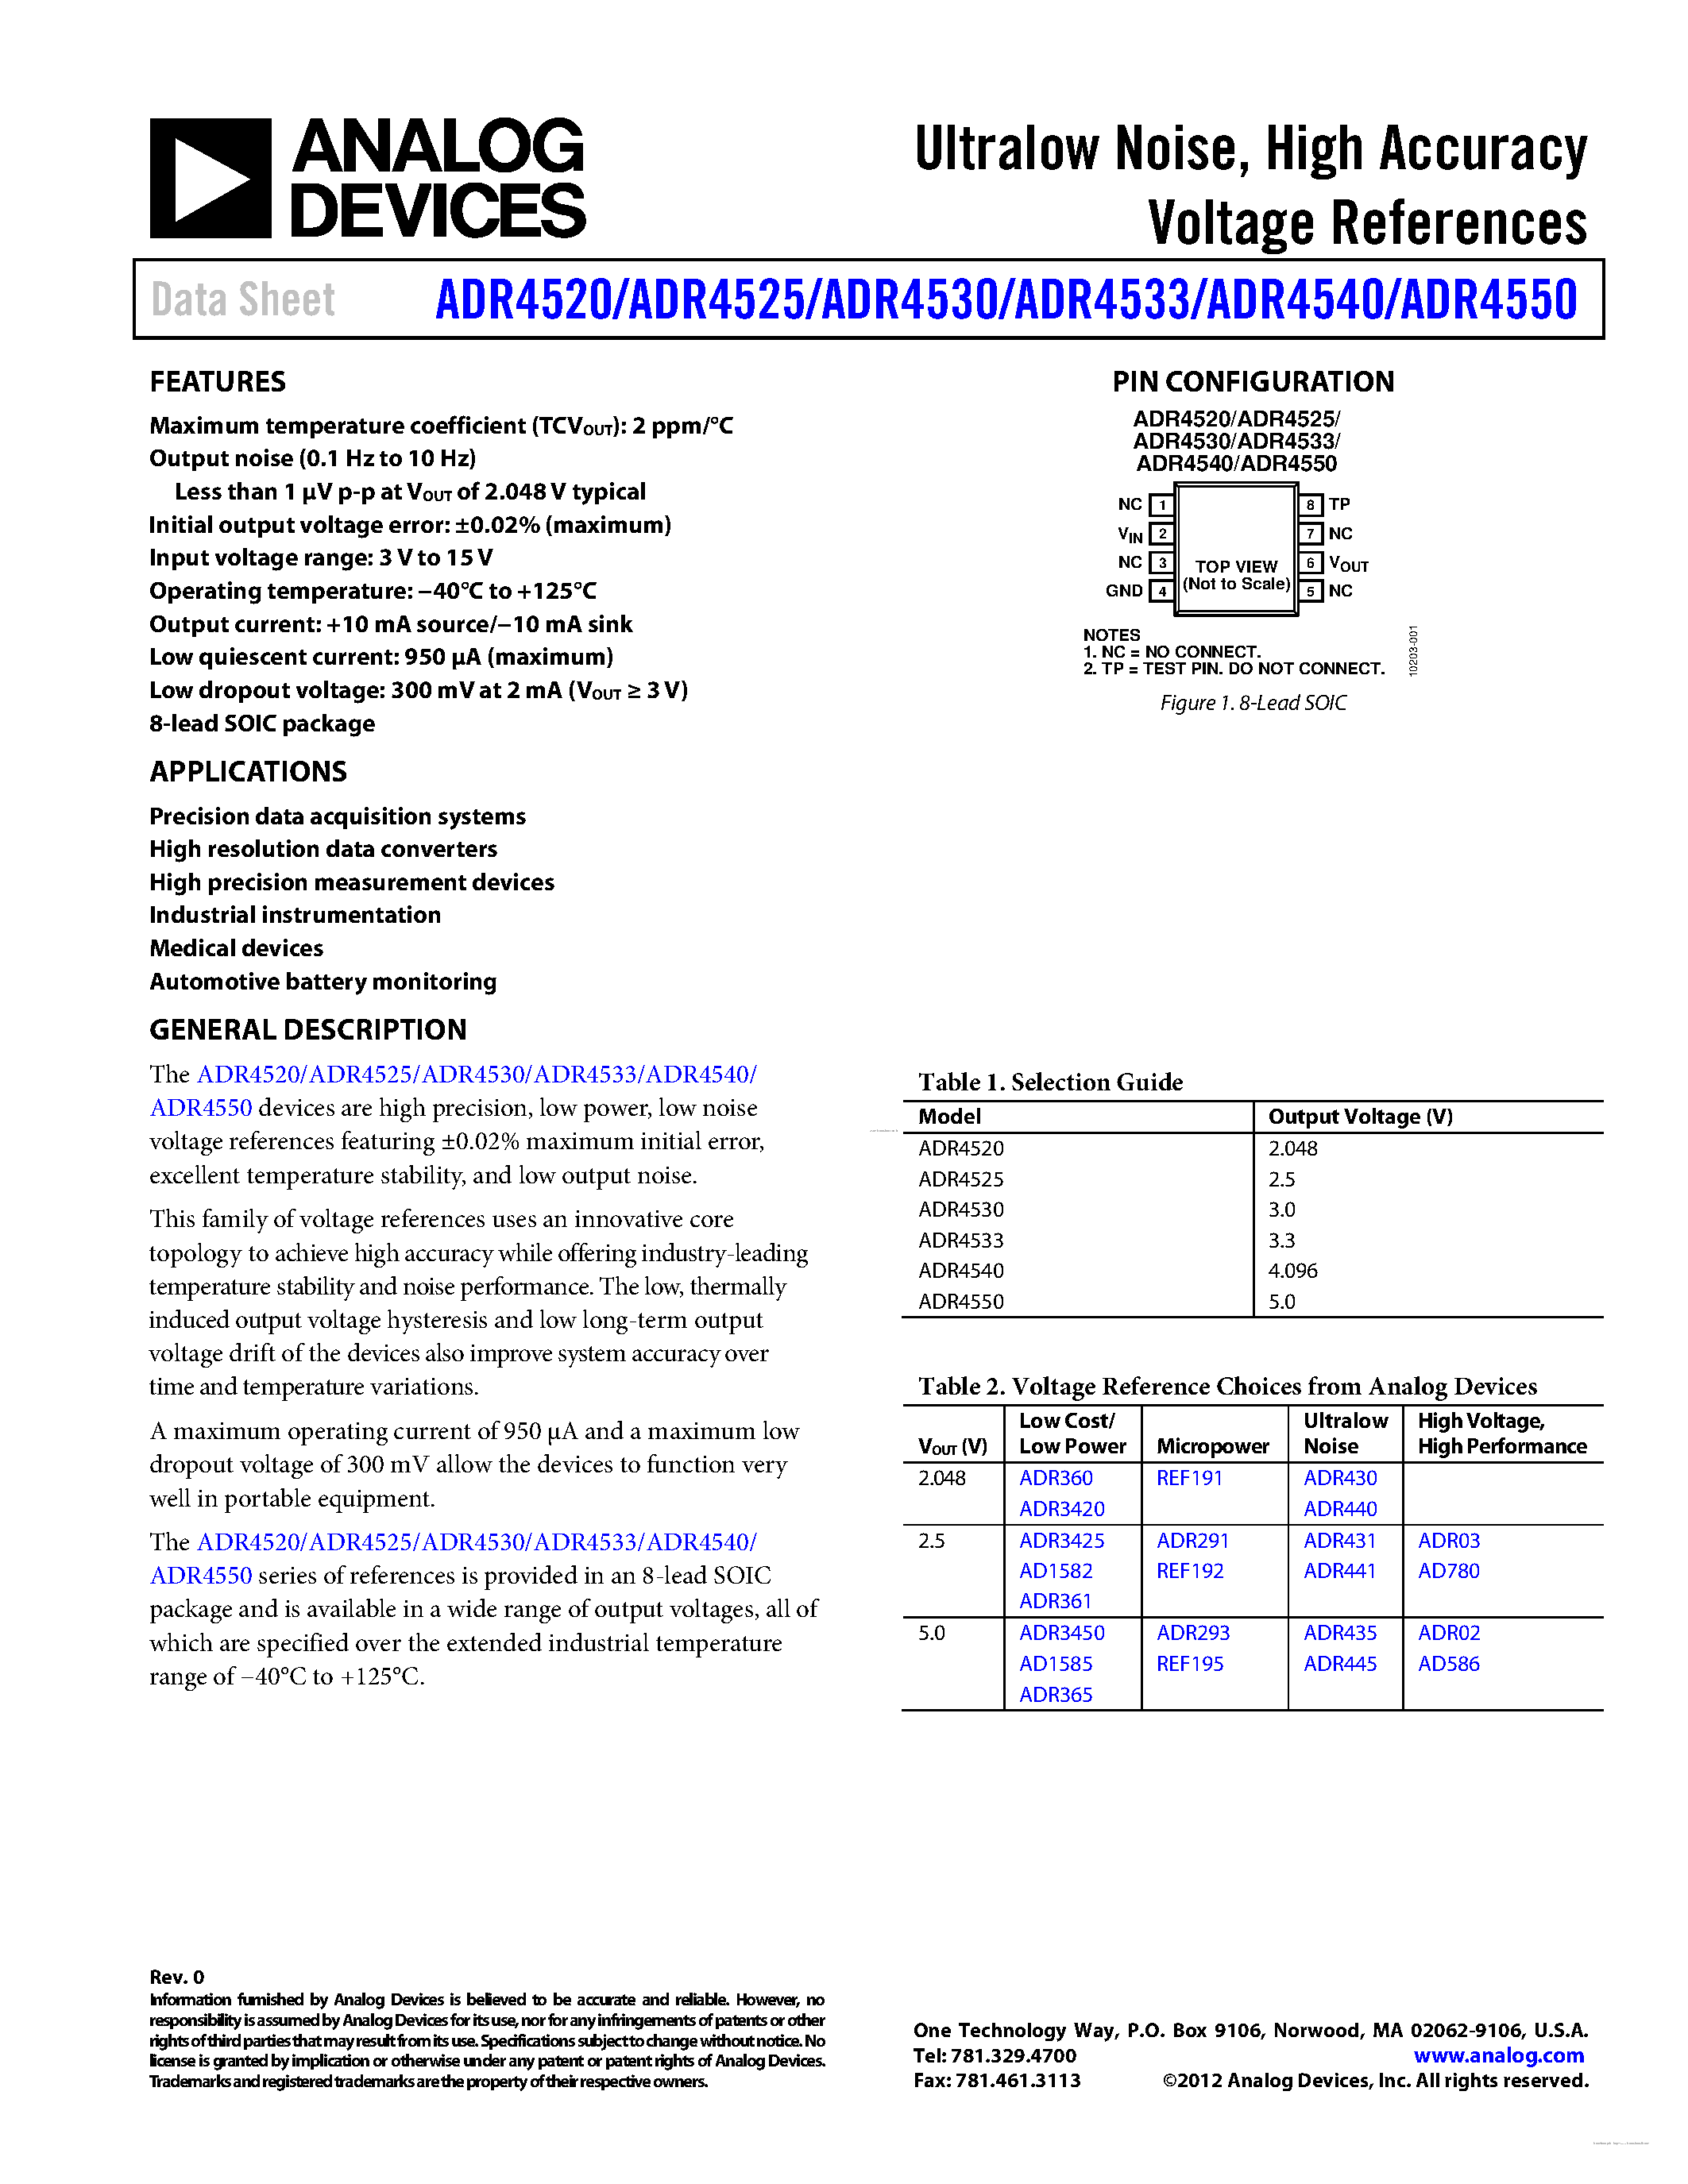 Даташит ADR4520 - (ADR4520 - ADR4550) High Accuracy Voltage References страница 1